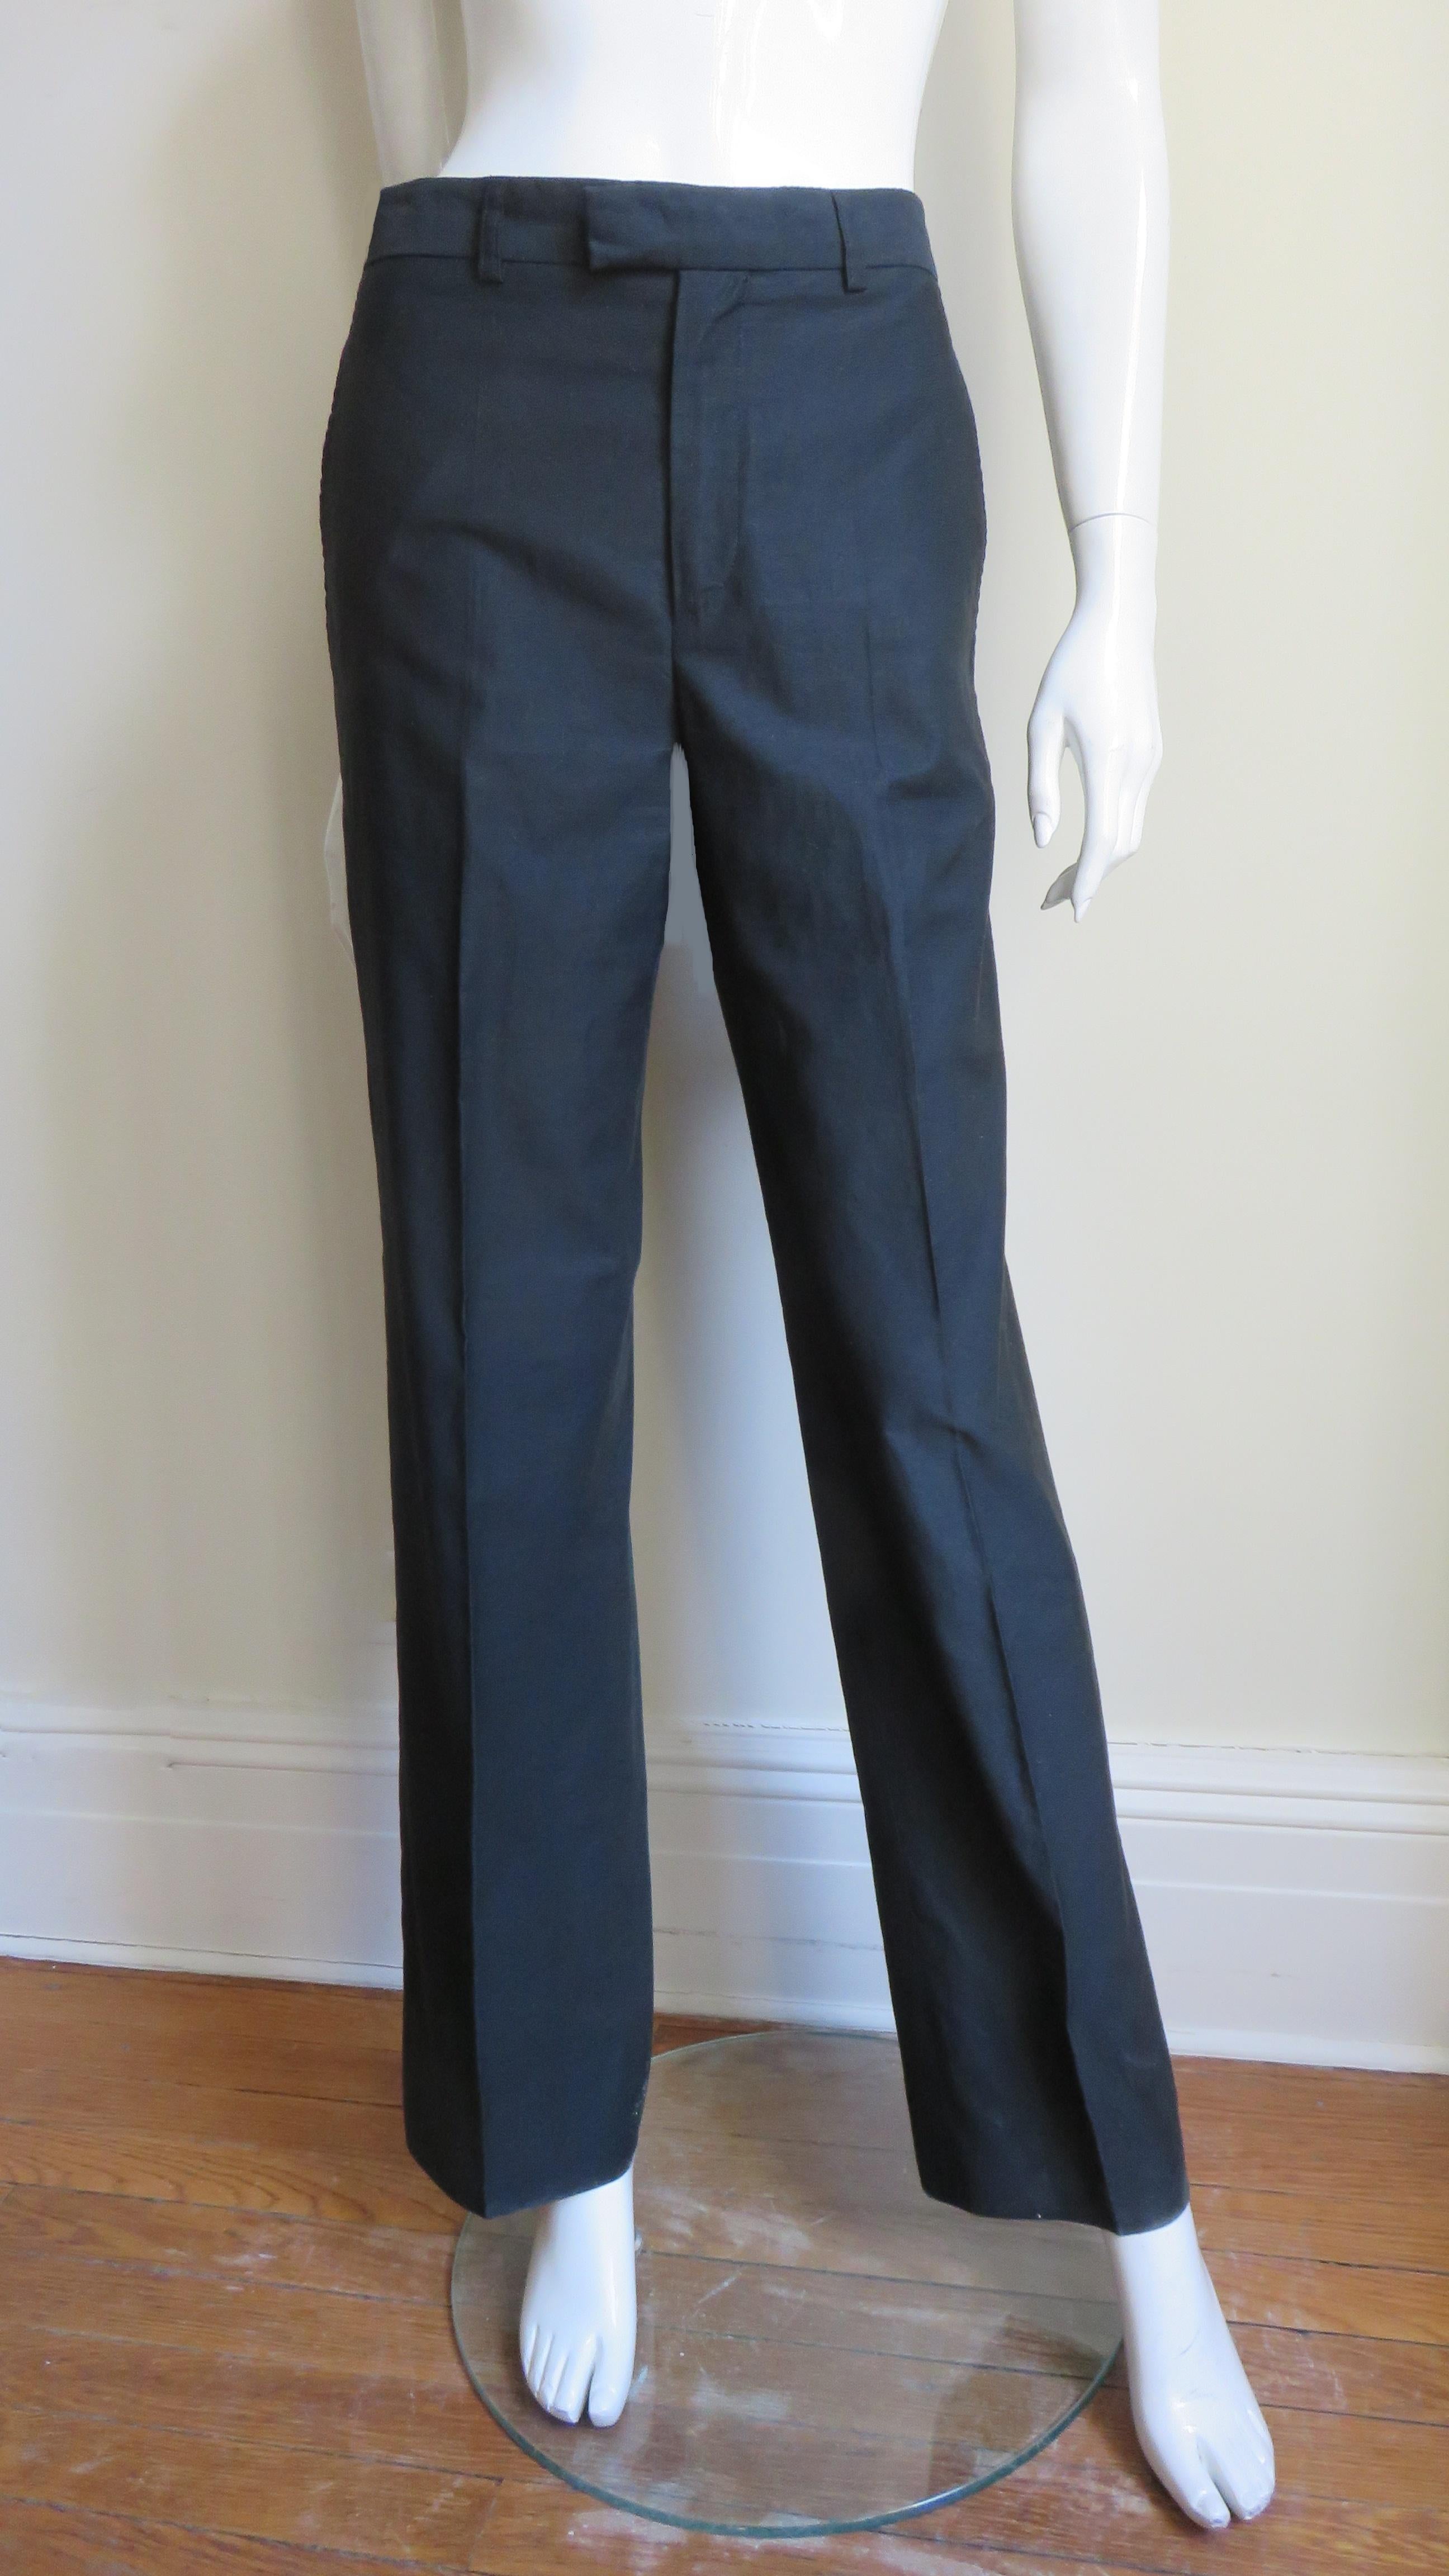 Jean Paul Gaultier Iconic Cage Corset lace up Jacket Pant Suit S/S 1989 For Sale 4